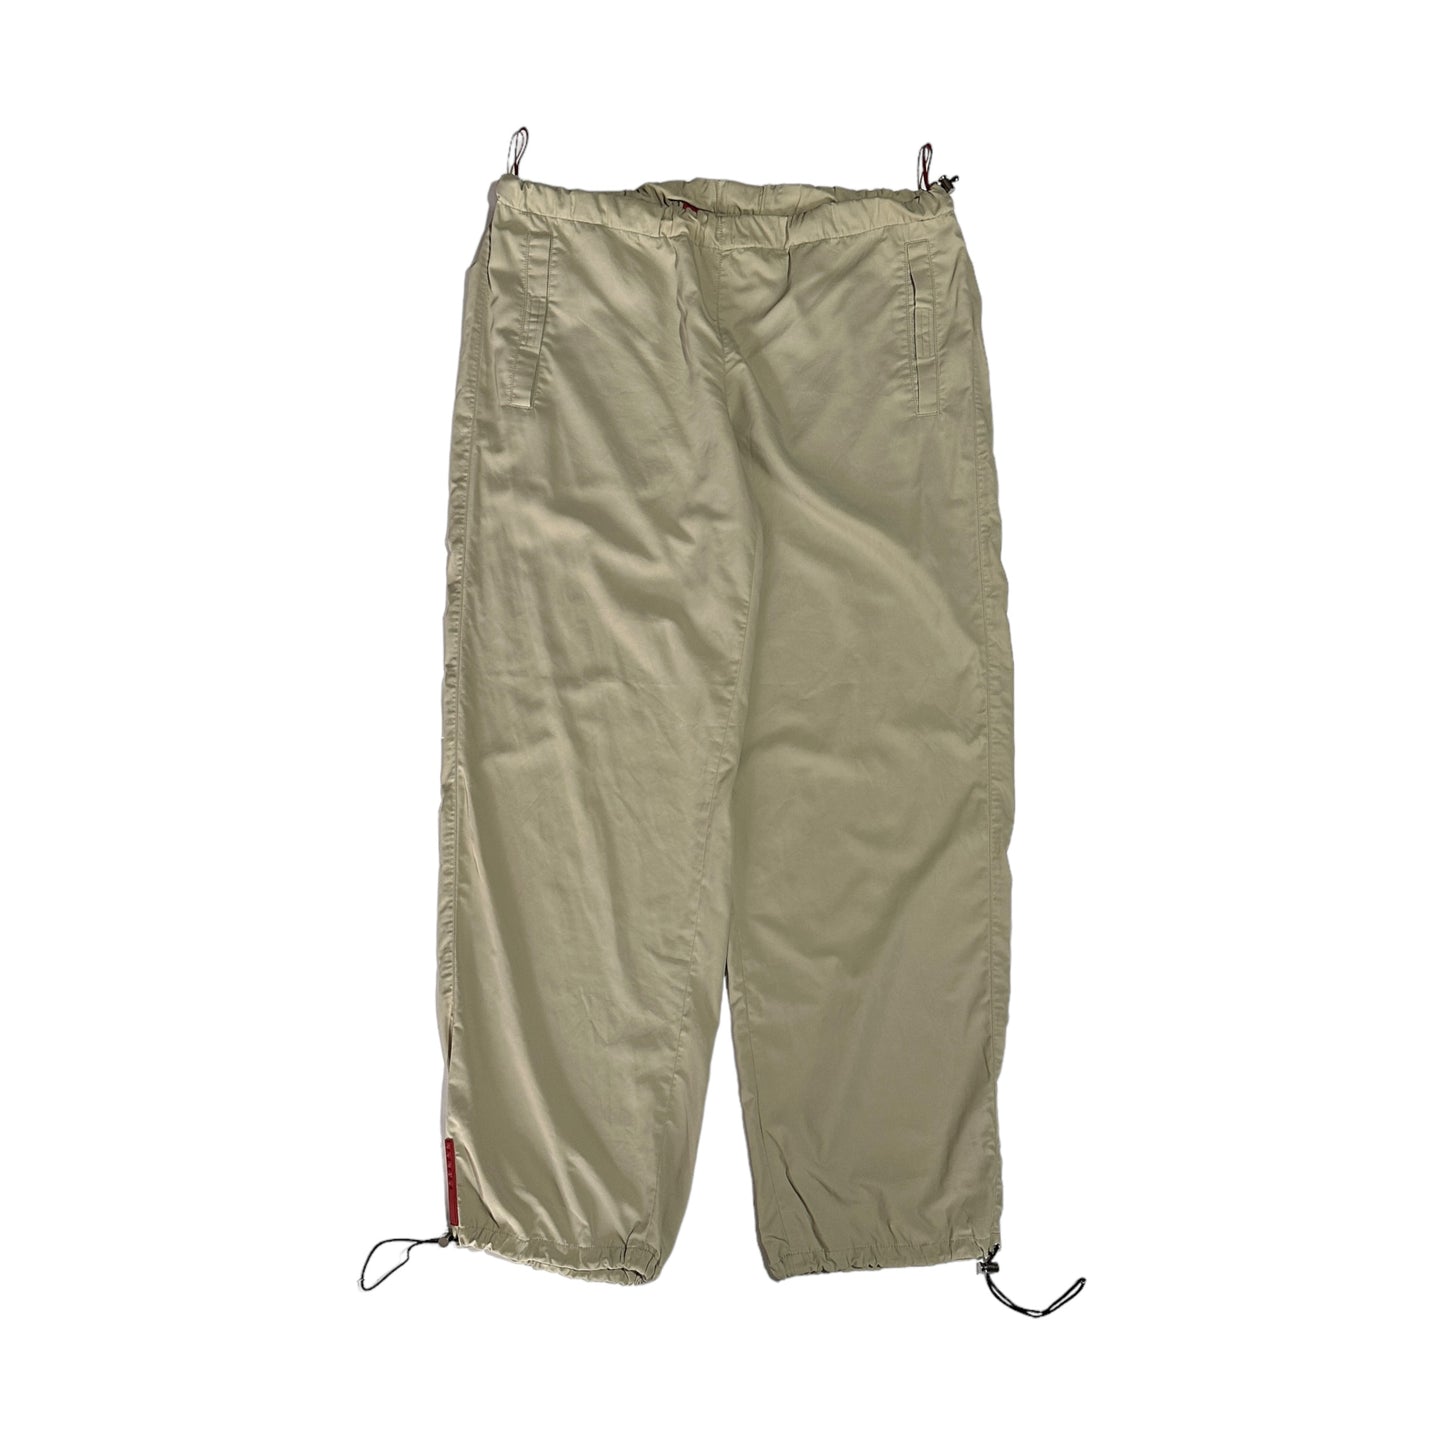 00’s Adjustable Nylon Pants (44W)